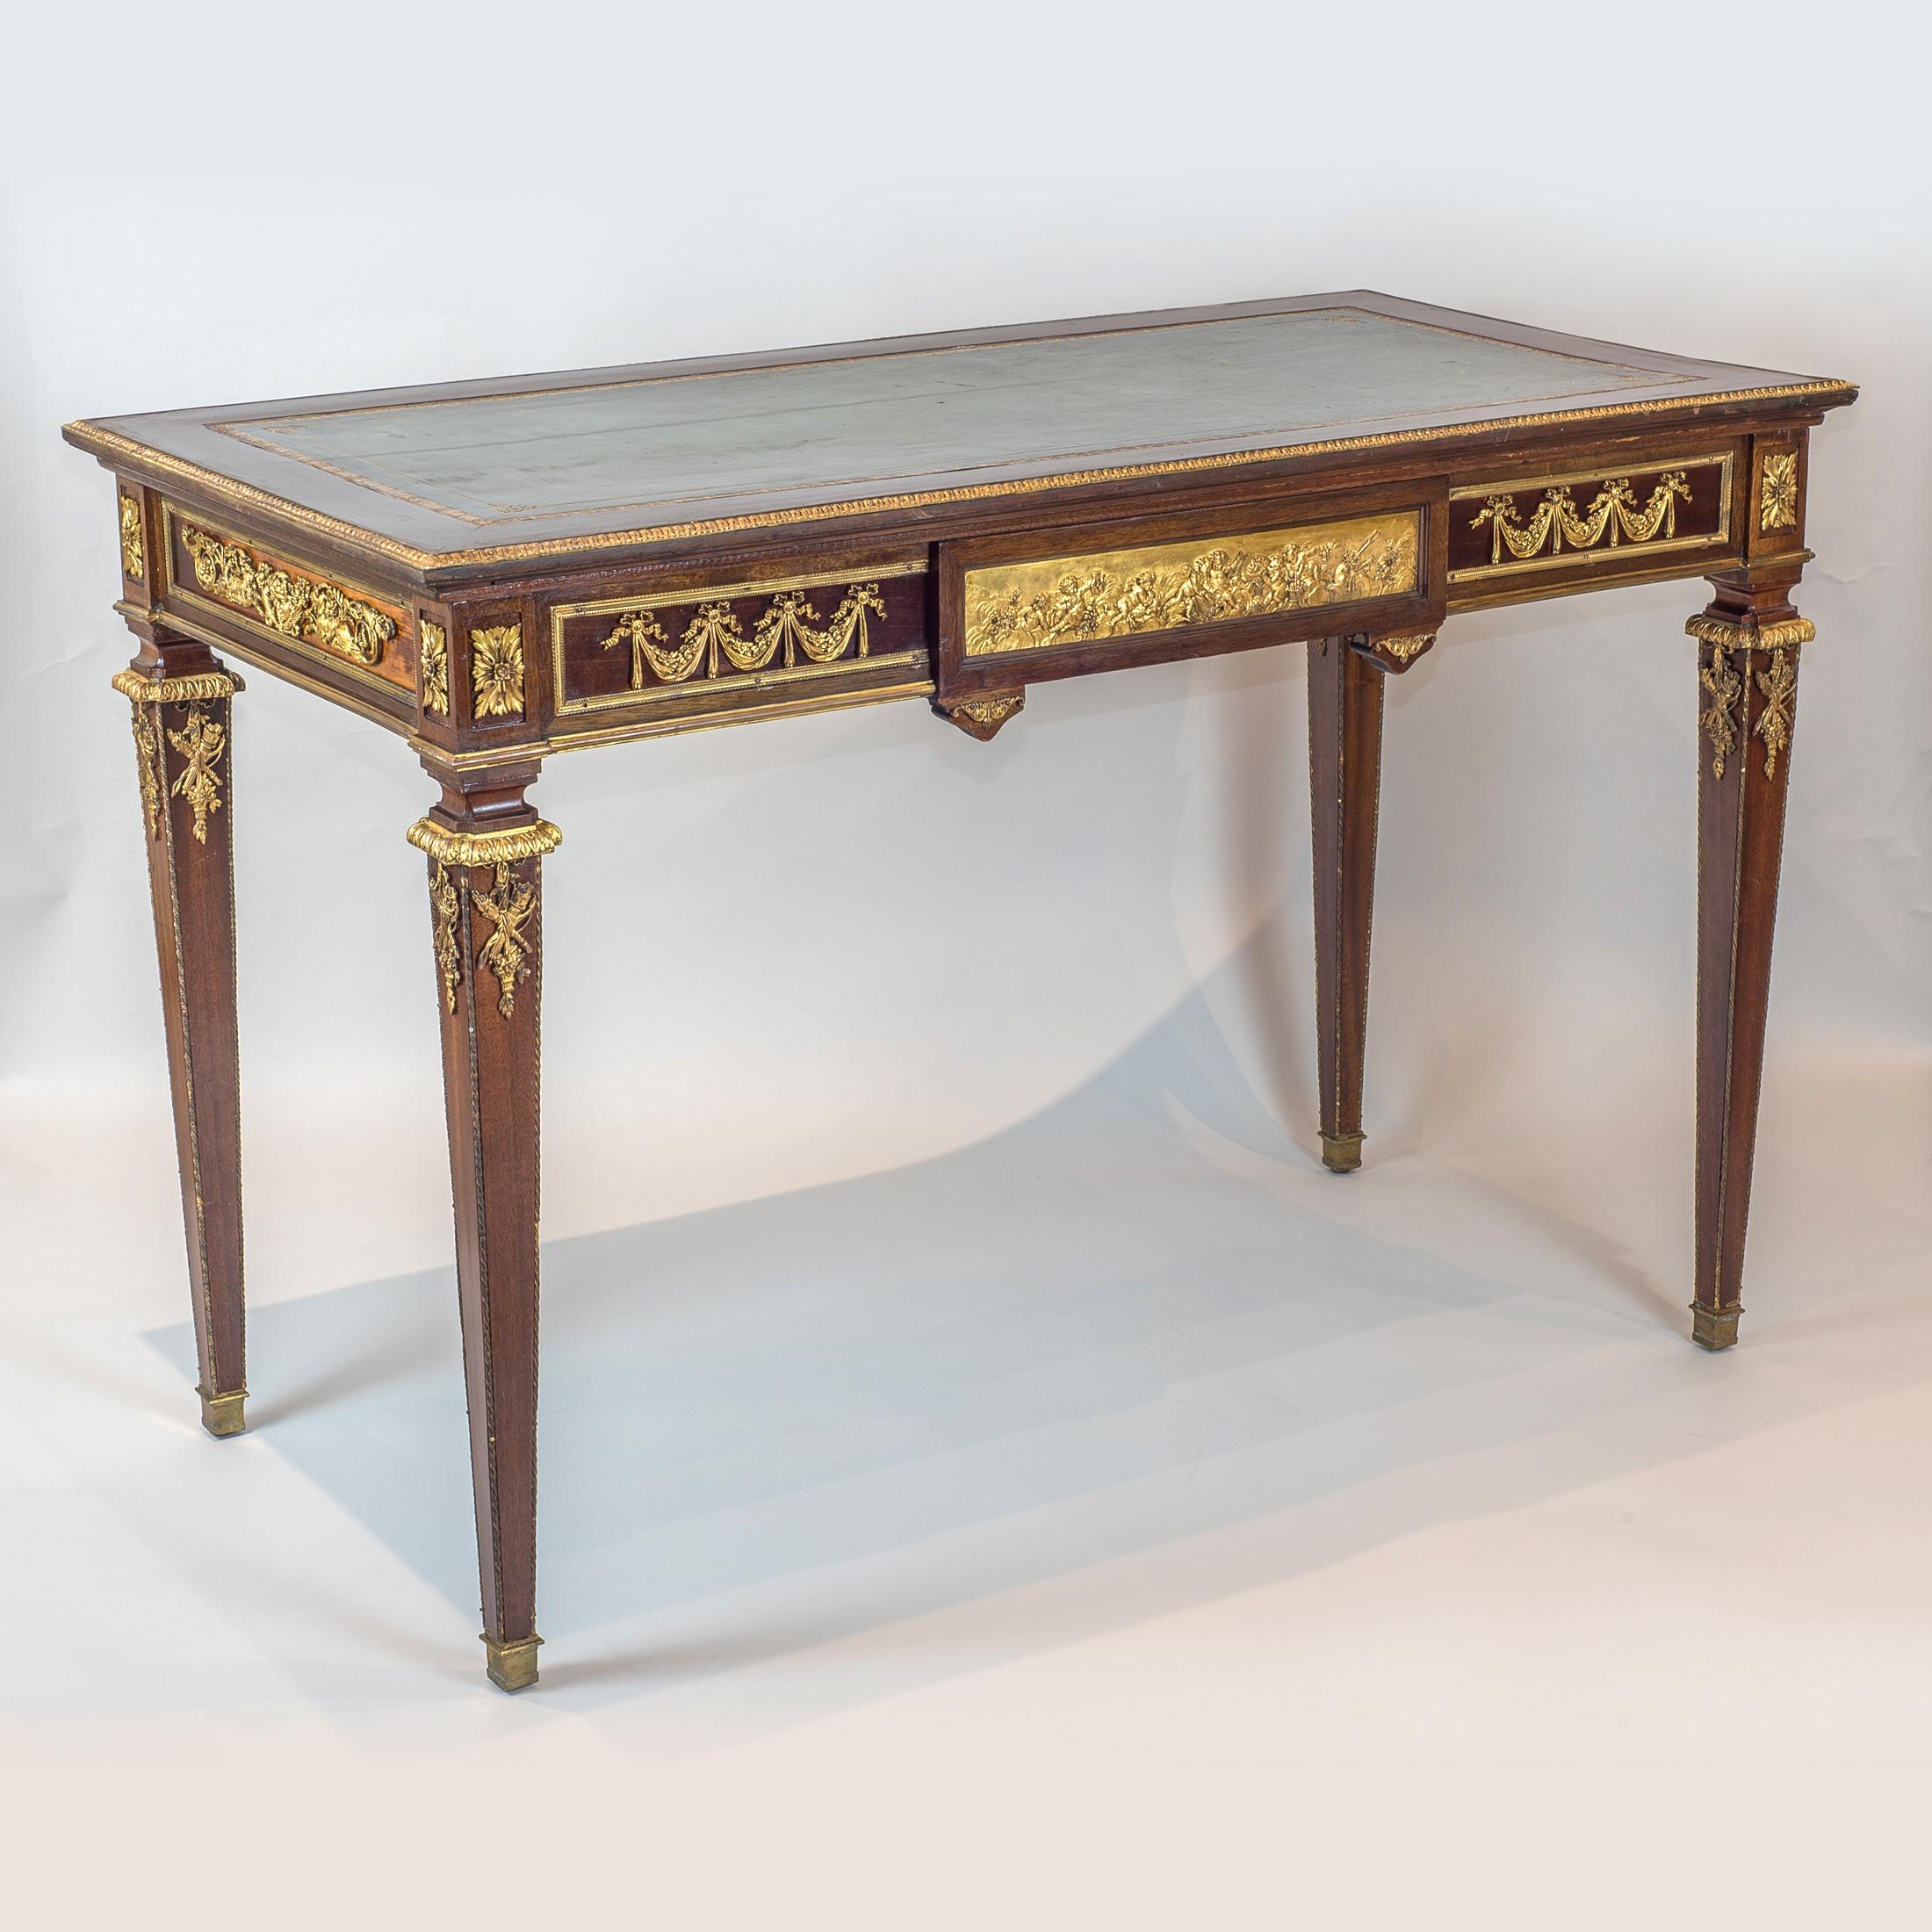 A fine Louis XVI style ormolu-mounted mahogany bureau plat.

Origin: French
Date: late 19th century
Dimension: H 29 1/4 x W 44 x D 22 3/4.